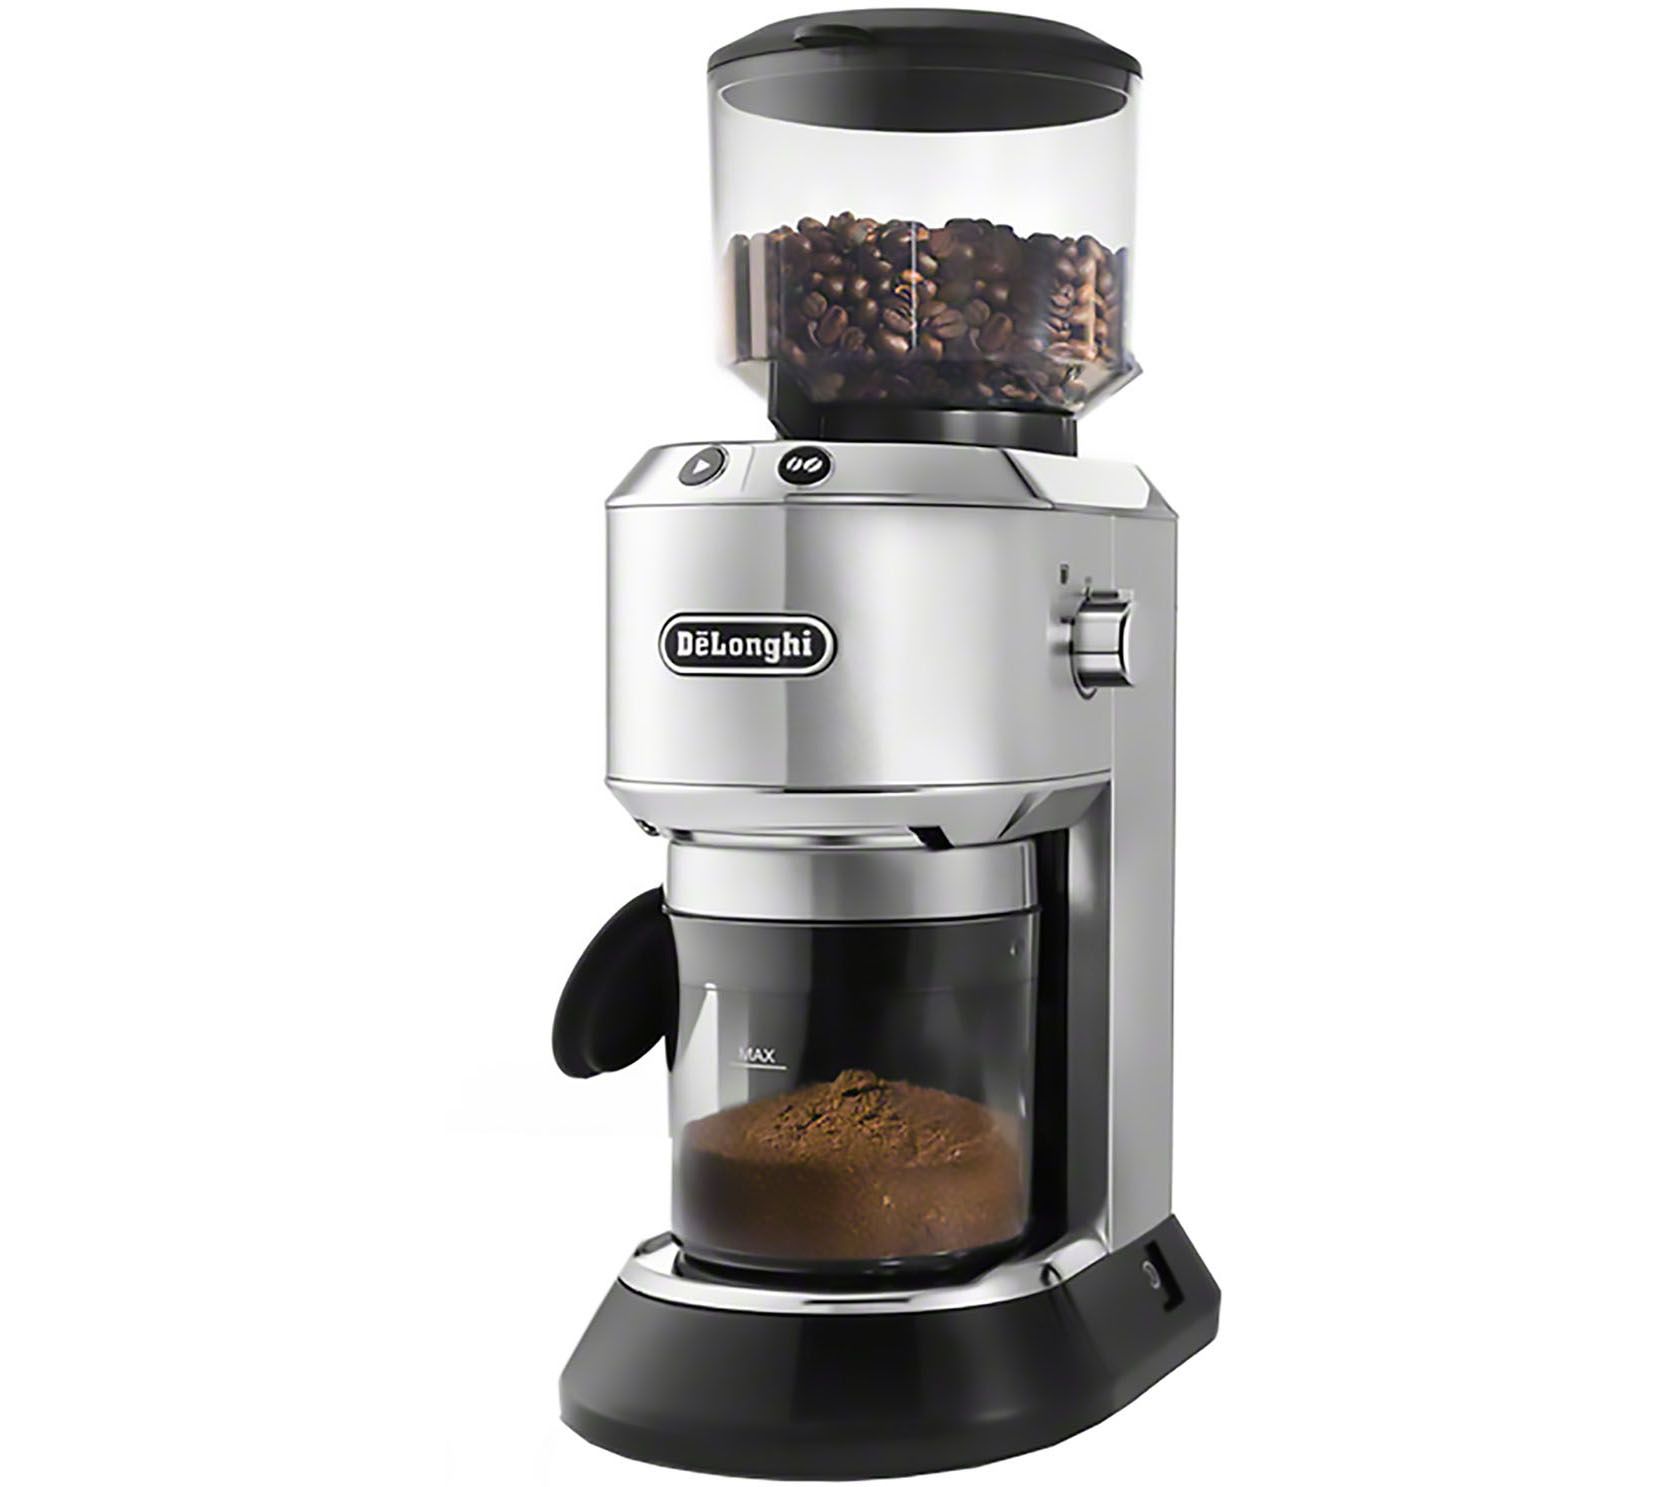 KG521M Offers Different Settings of Grind Size De'Longhi Dedica Coffee Grinder 